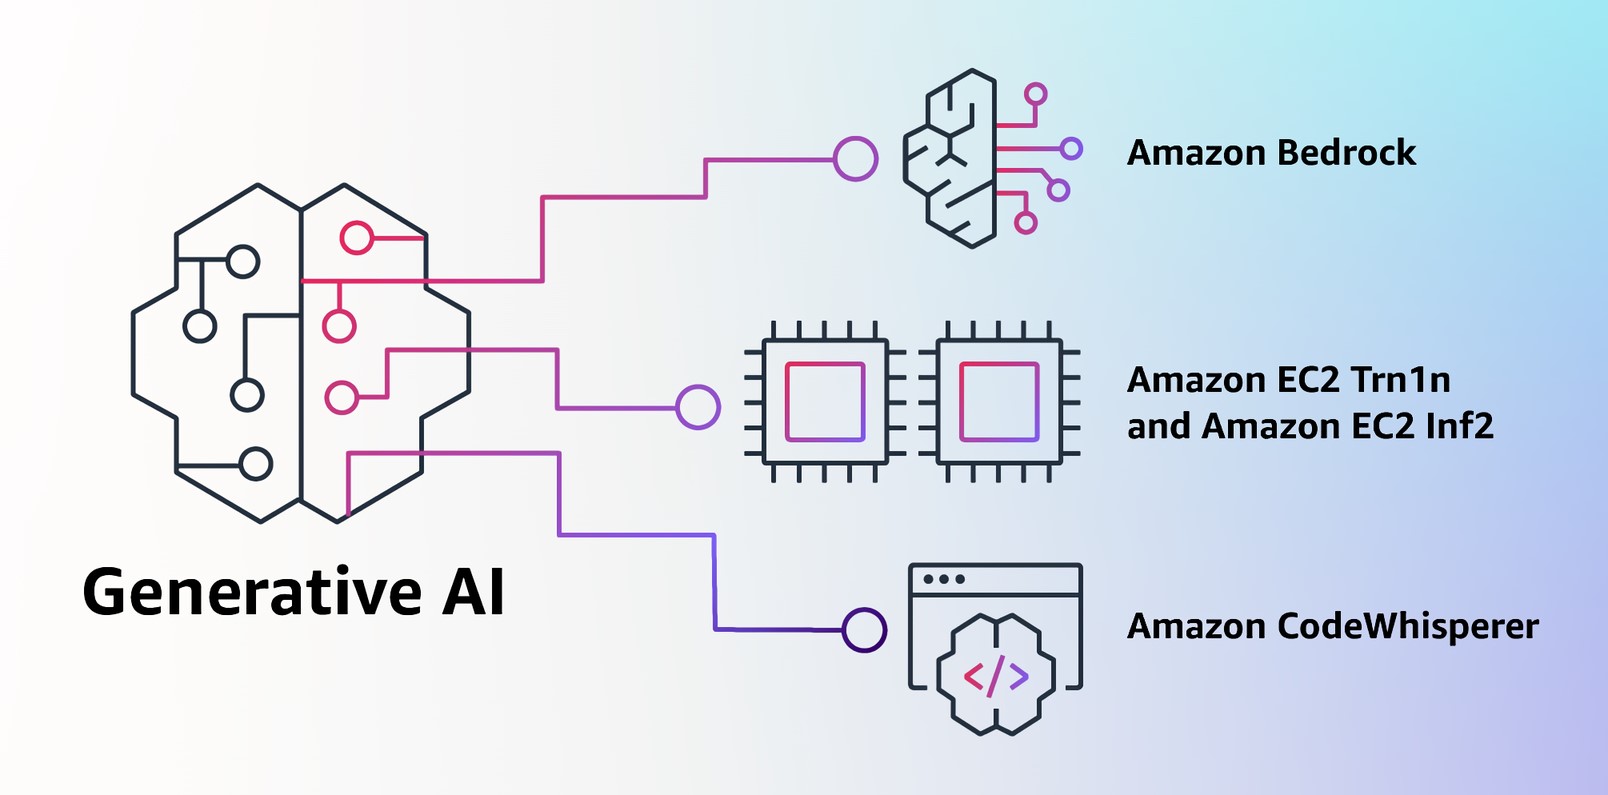 Amazonが生成AIに本格参入─文章生成・要約・画像生成など、生成AIをAPIで利用できる「Amazon Bedrock」を発表